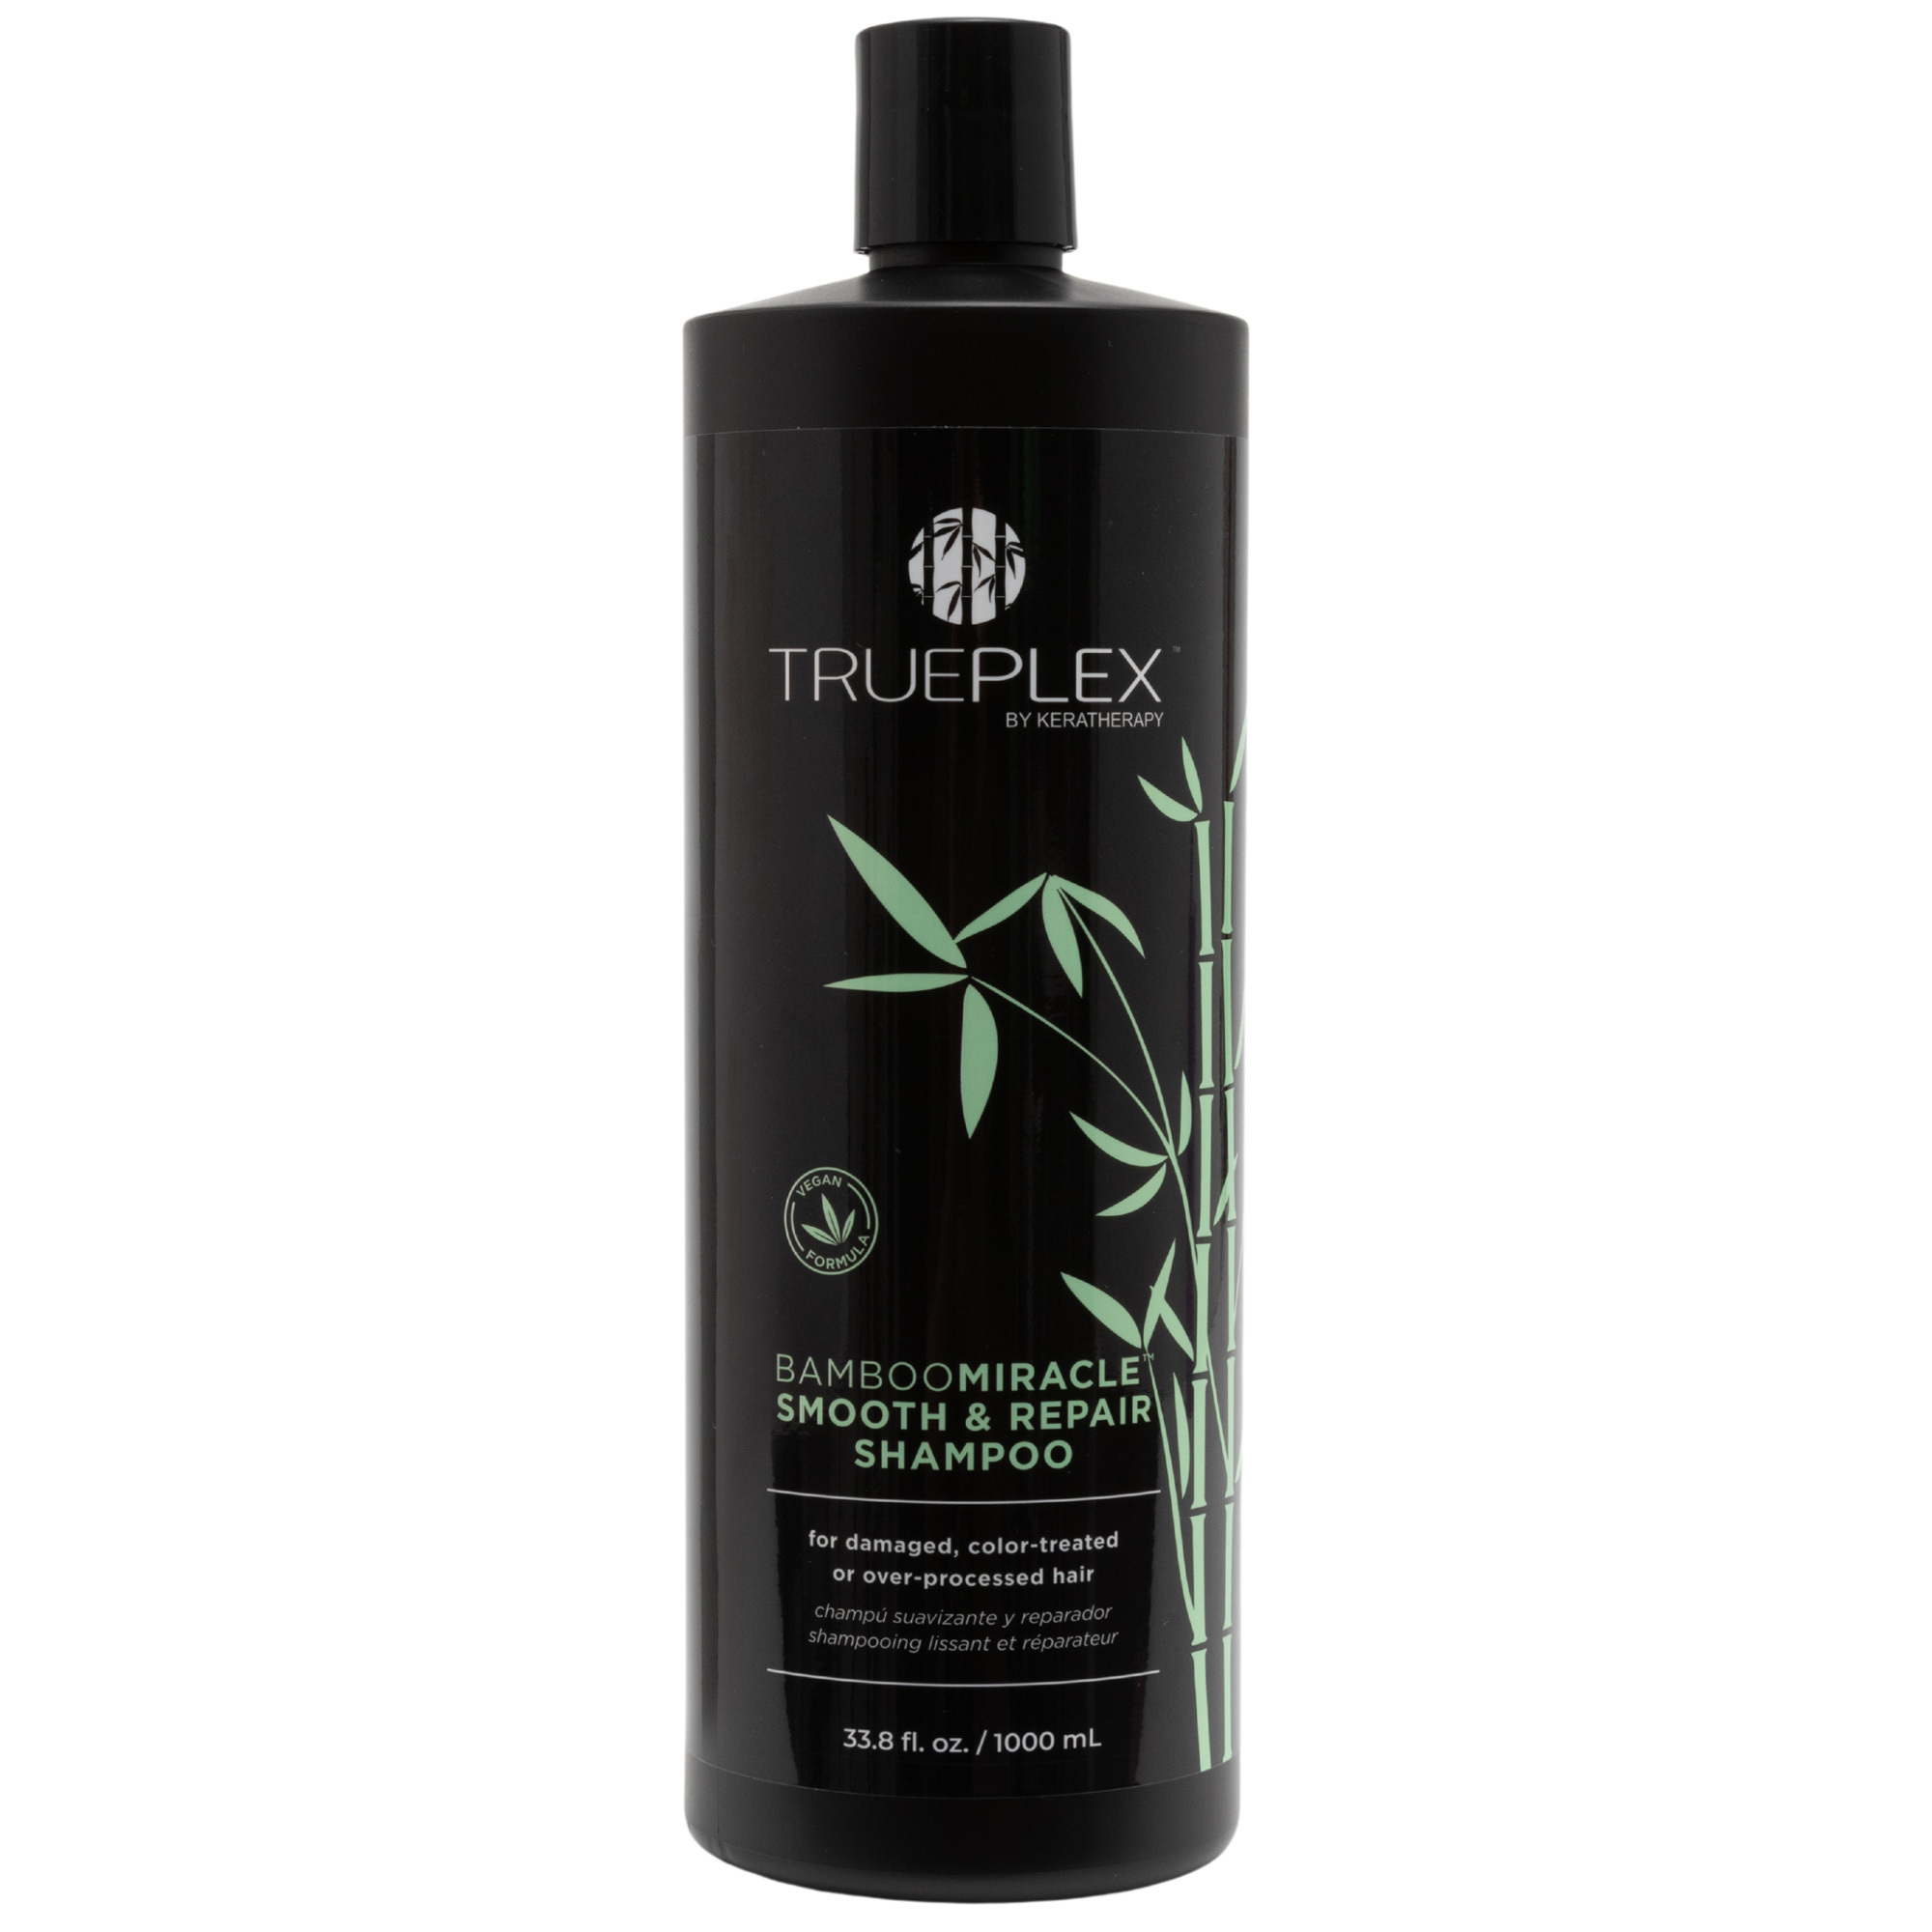 TruePlex Bamboo Miracle: Smooth & Repair Shampoo